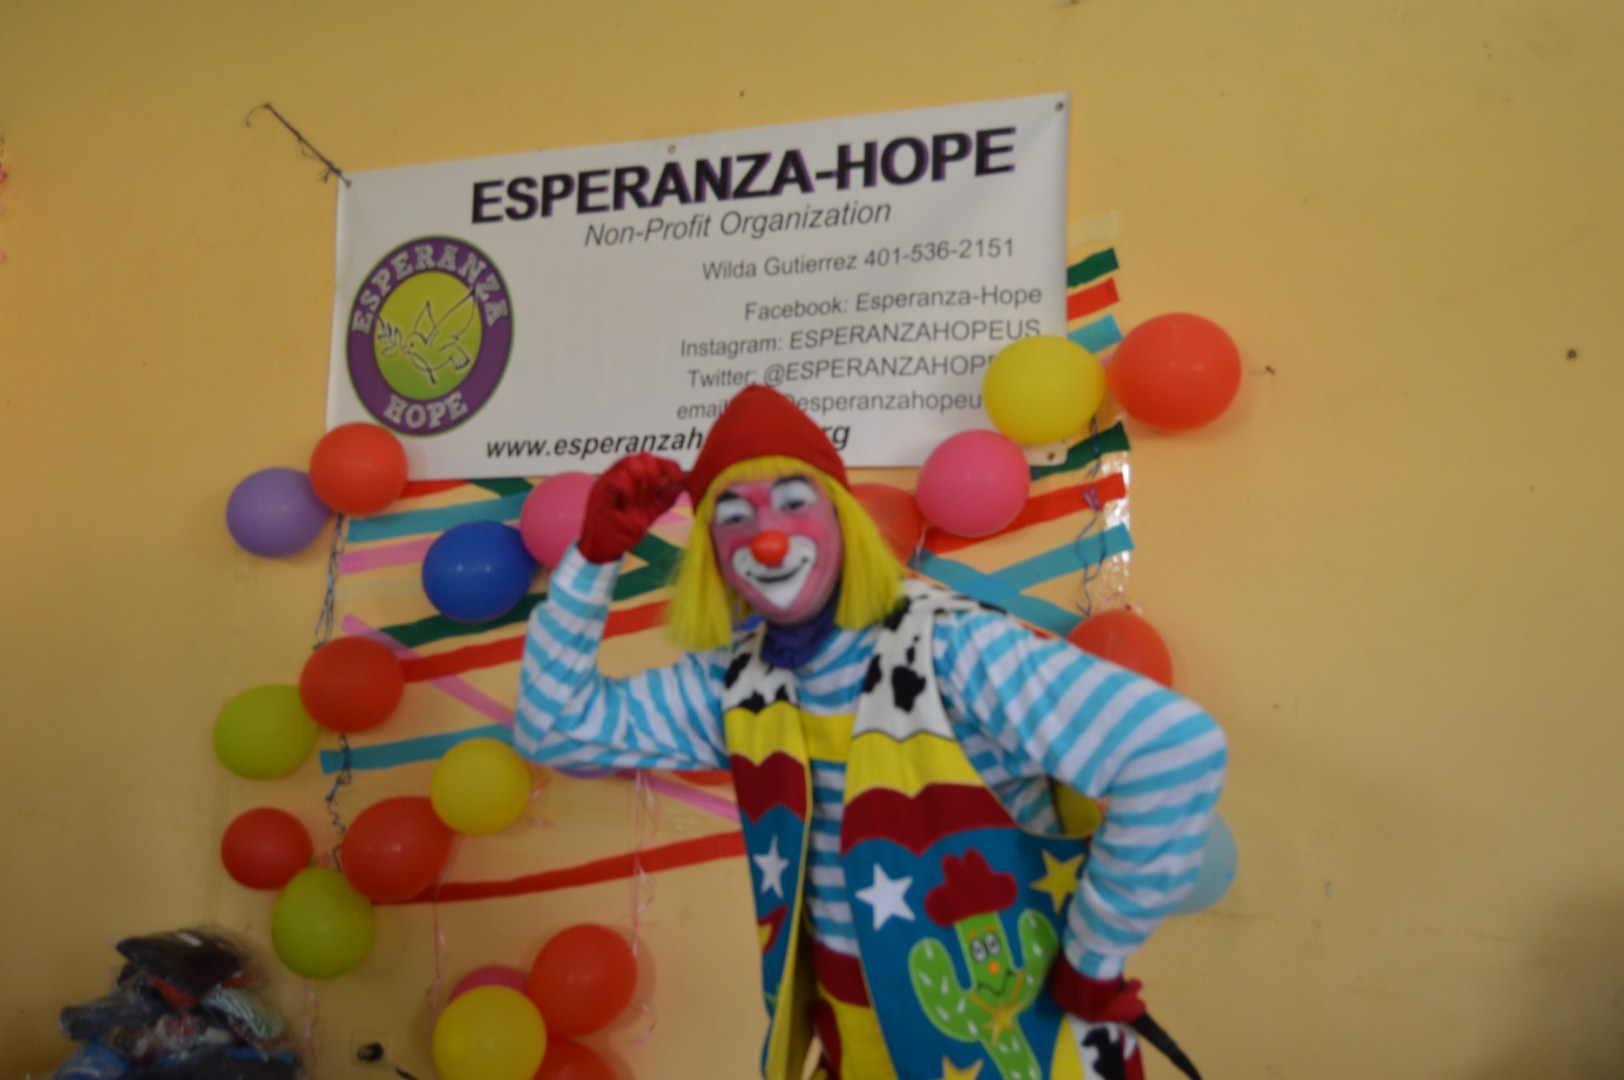 A clown posing in front of Esperanza-Hope’s tarpaulin